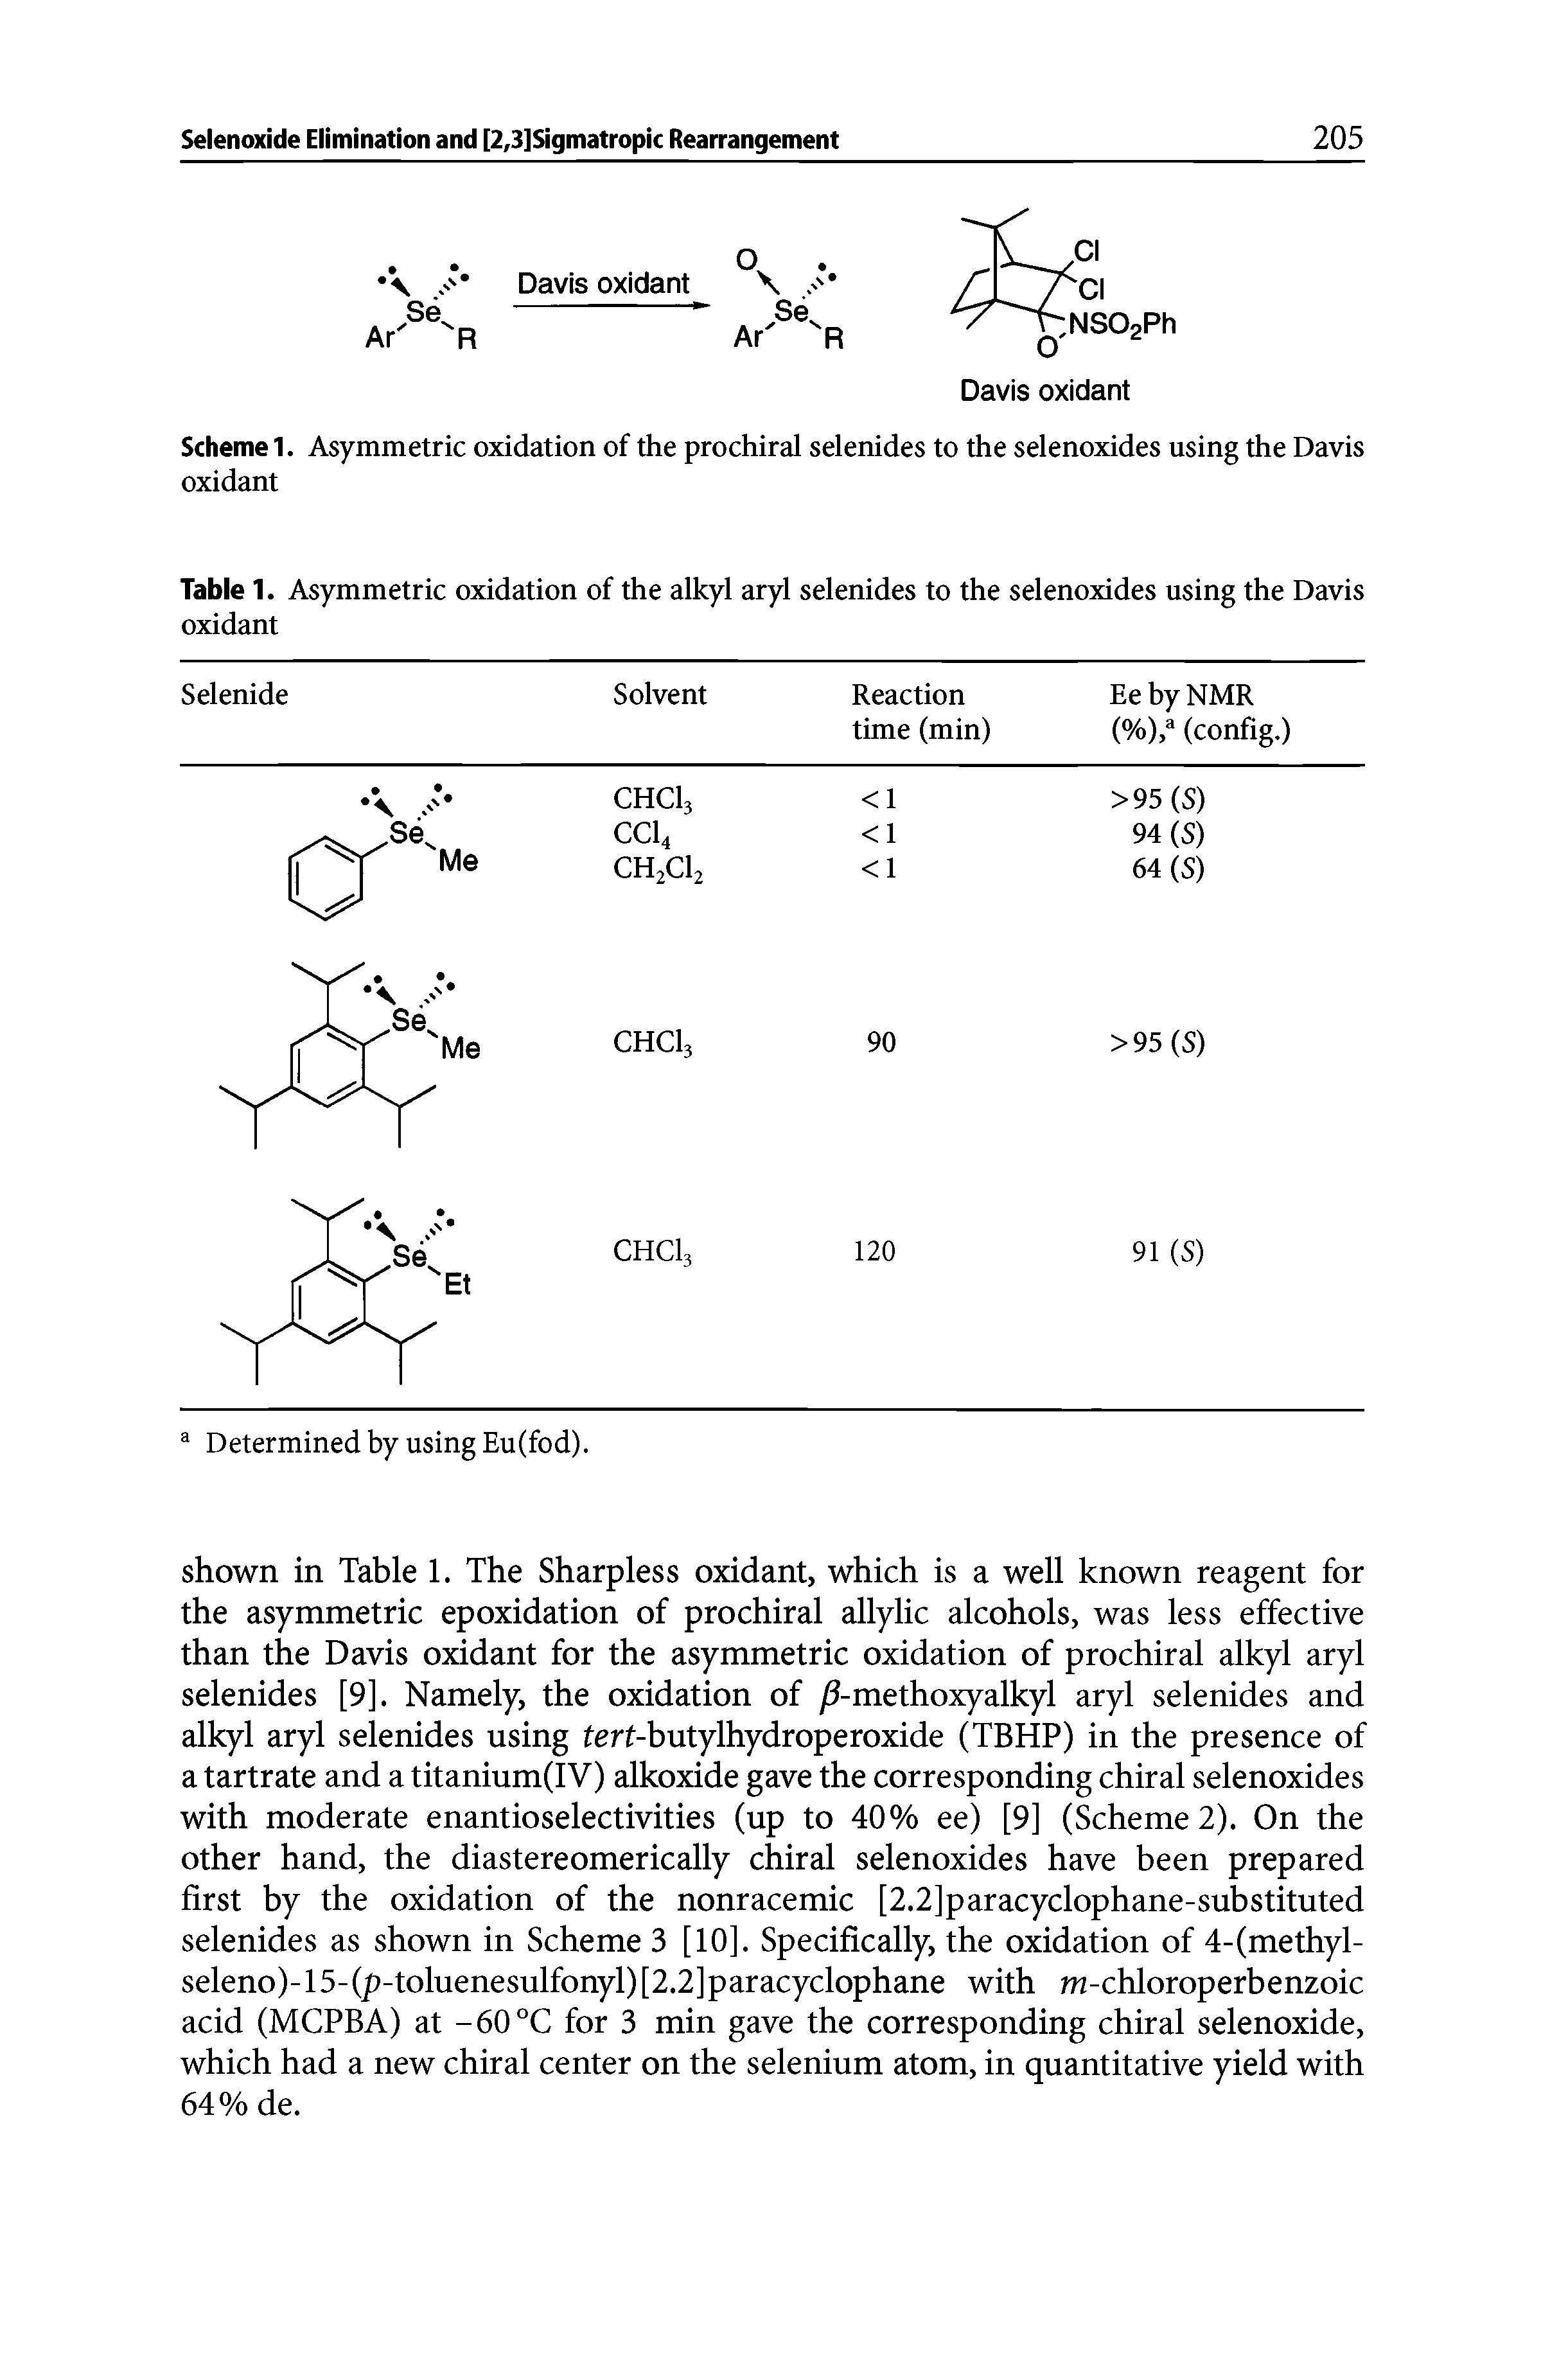 Scheme 1. Asymmetric oxidation of the prochiral selenides to the selenoxides using the Davis oxidant...